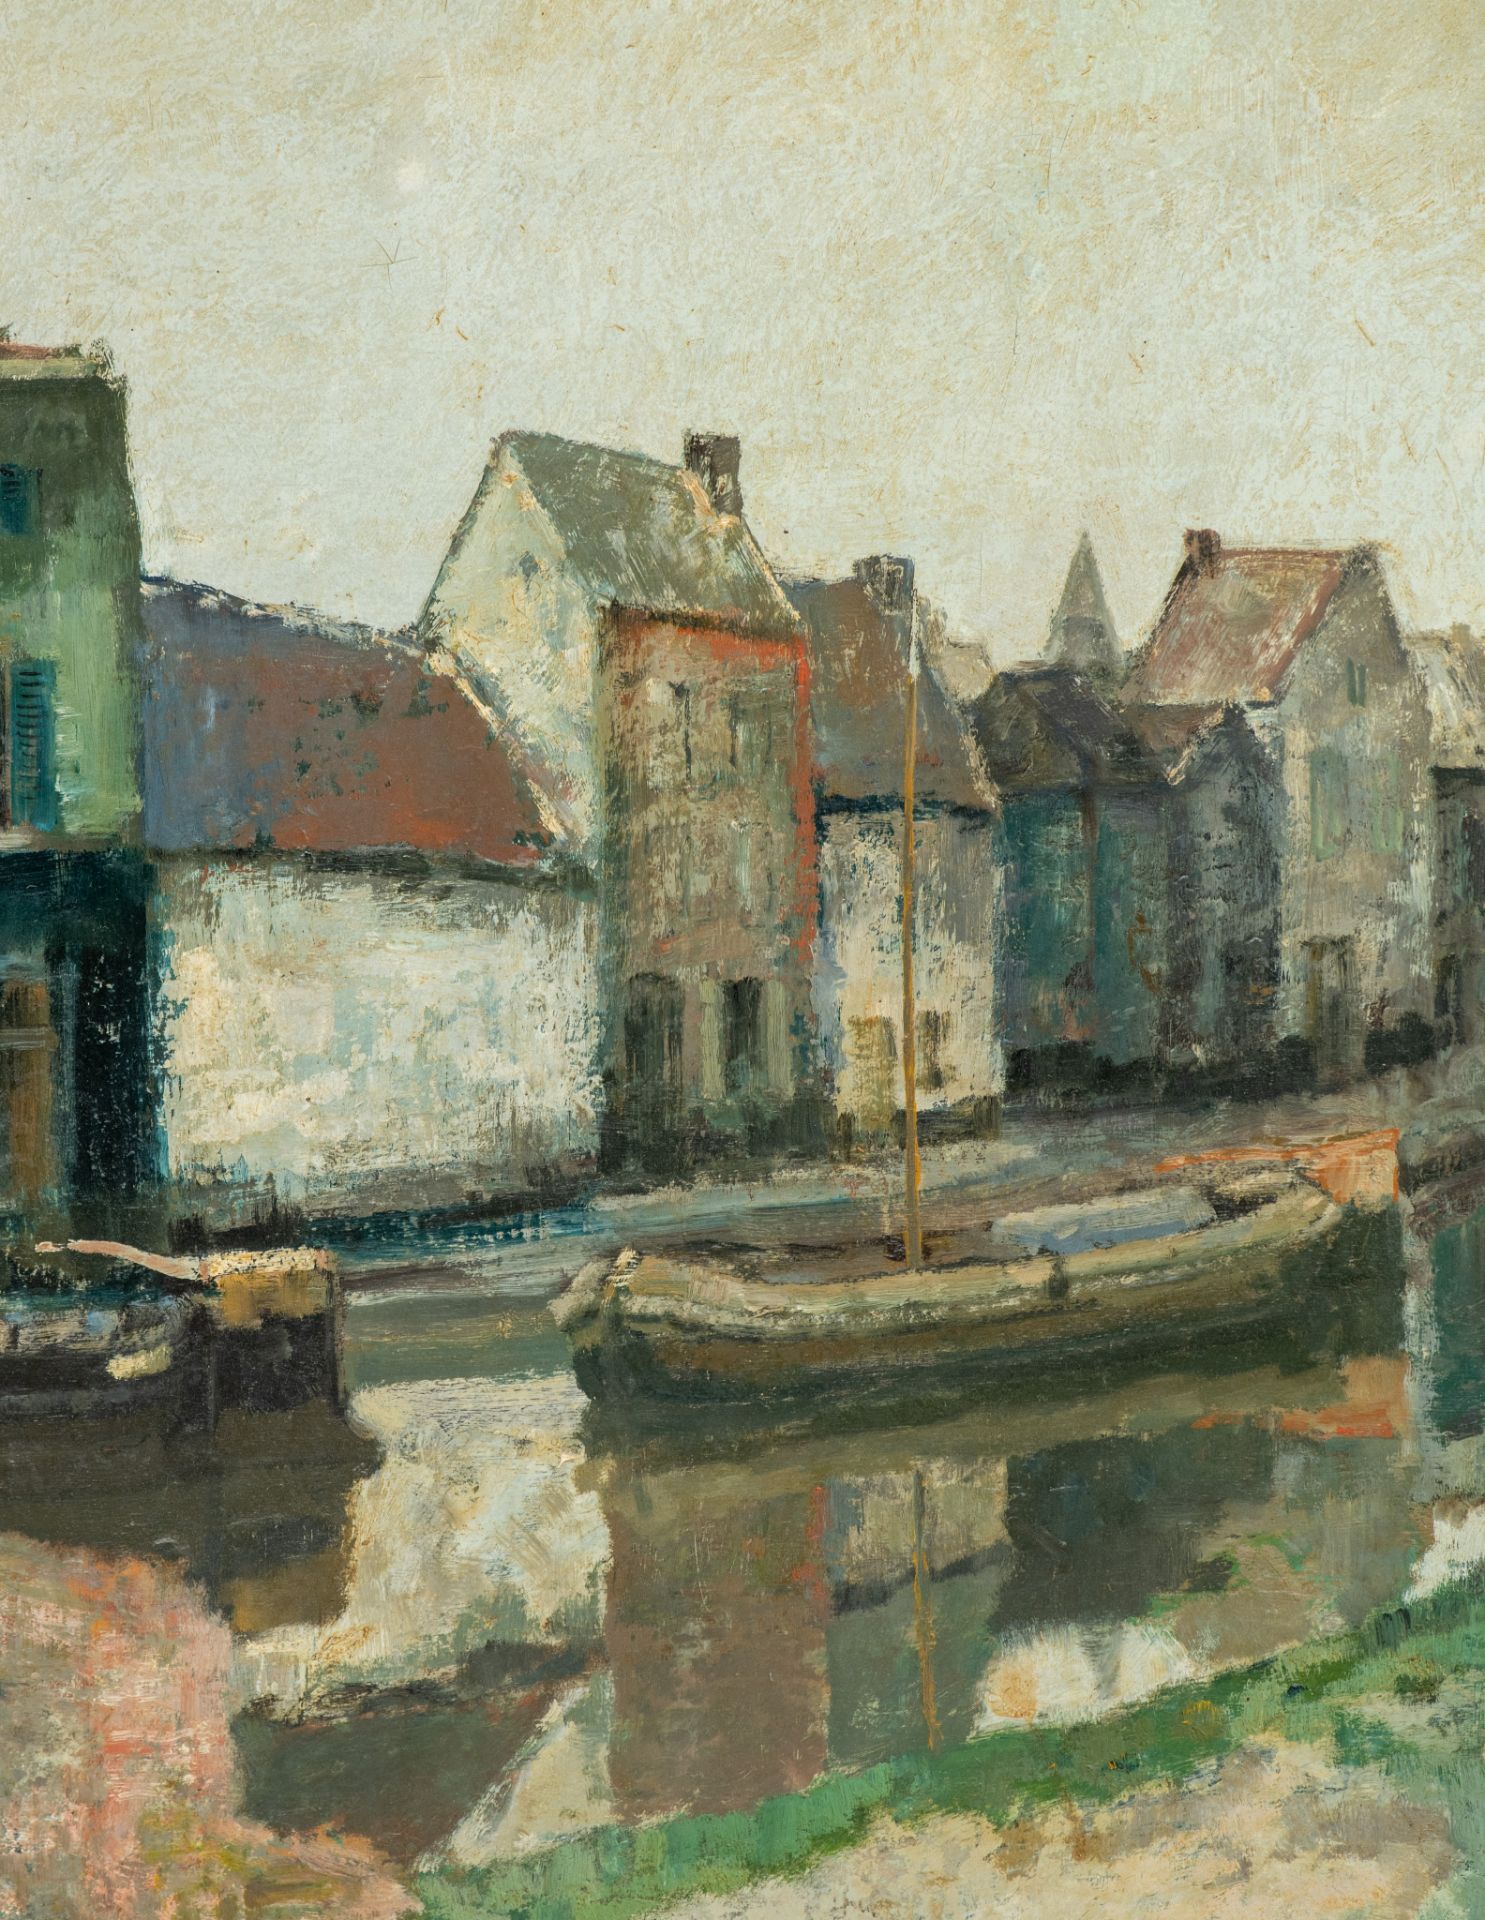 Armand Apol (1879-1950), 'Jardin de ma Maison', oil on canvas, 75 x 90 cm - Image 5 of 6